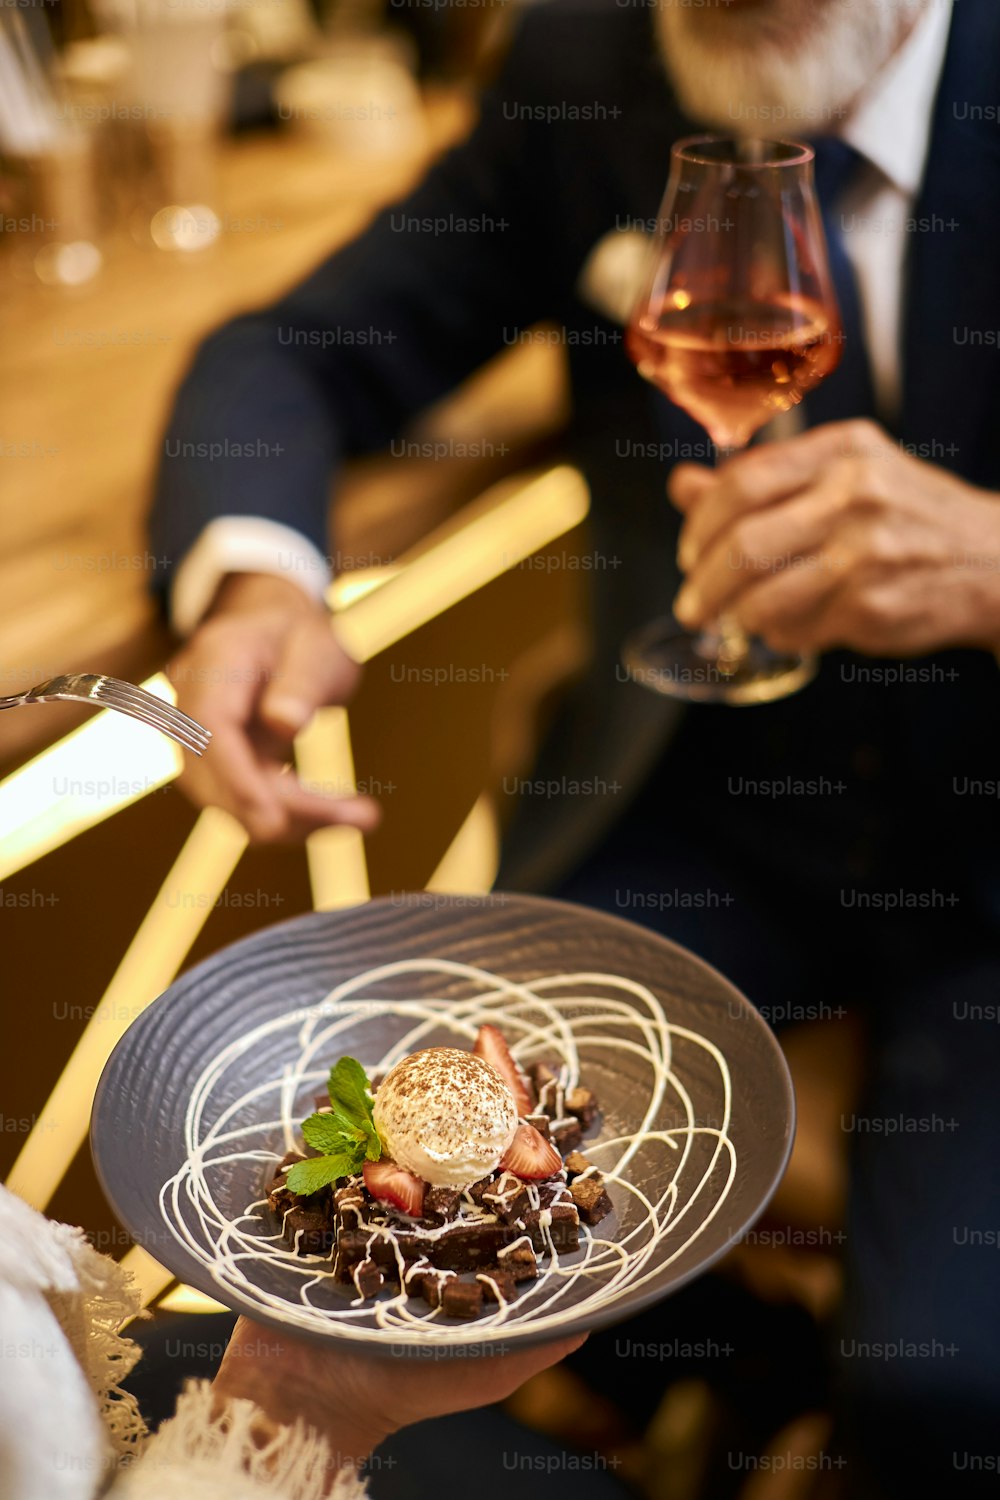 Imagen cercana de mano con copa de champán, postre dulce sobre plato gris. Hombre abalorio en esmoquin bebiendo